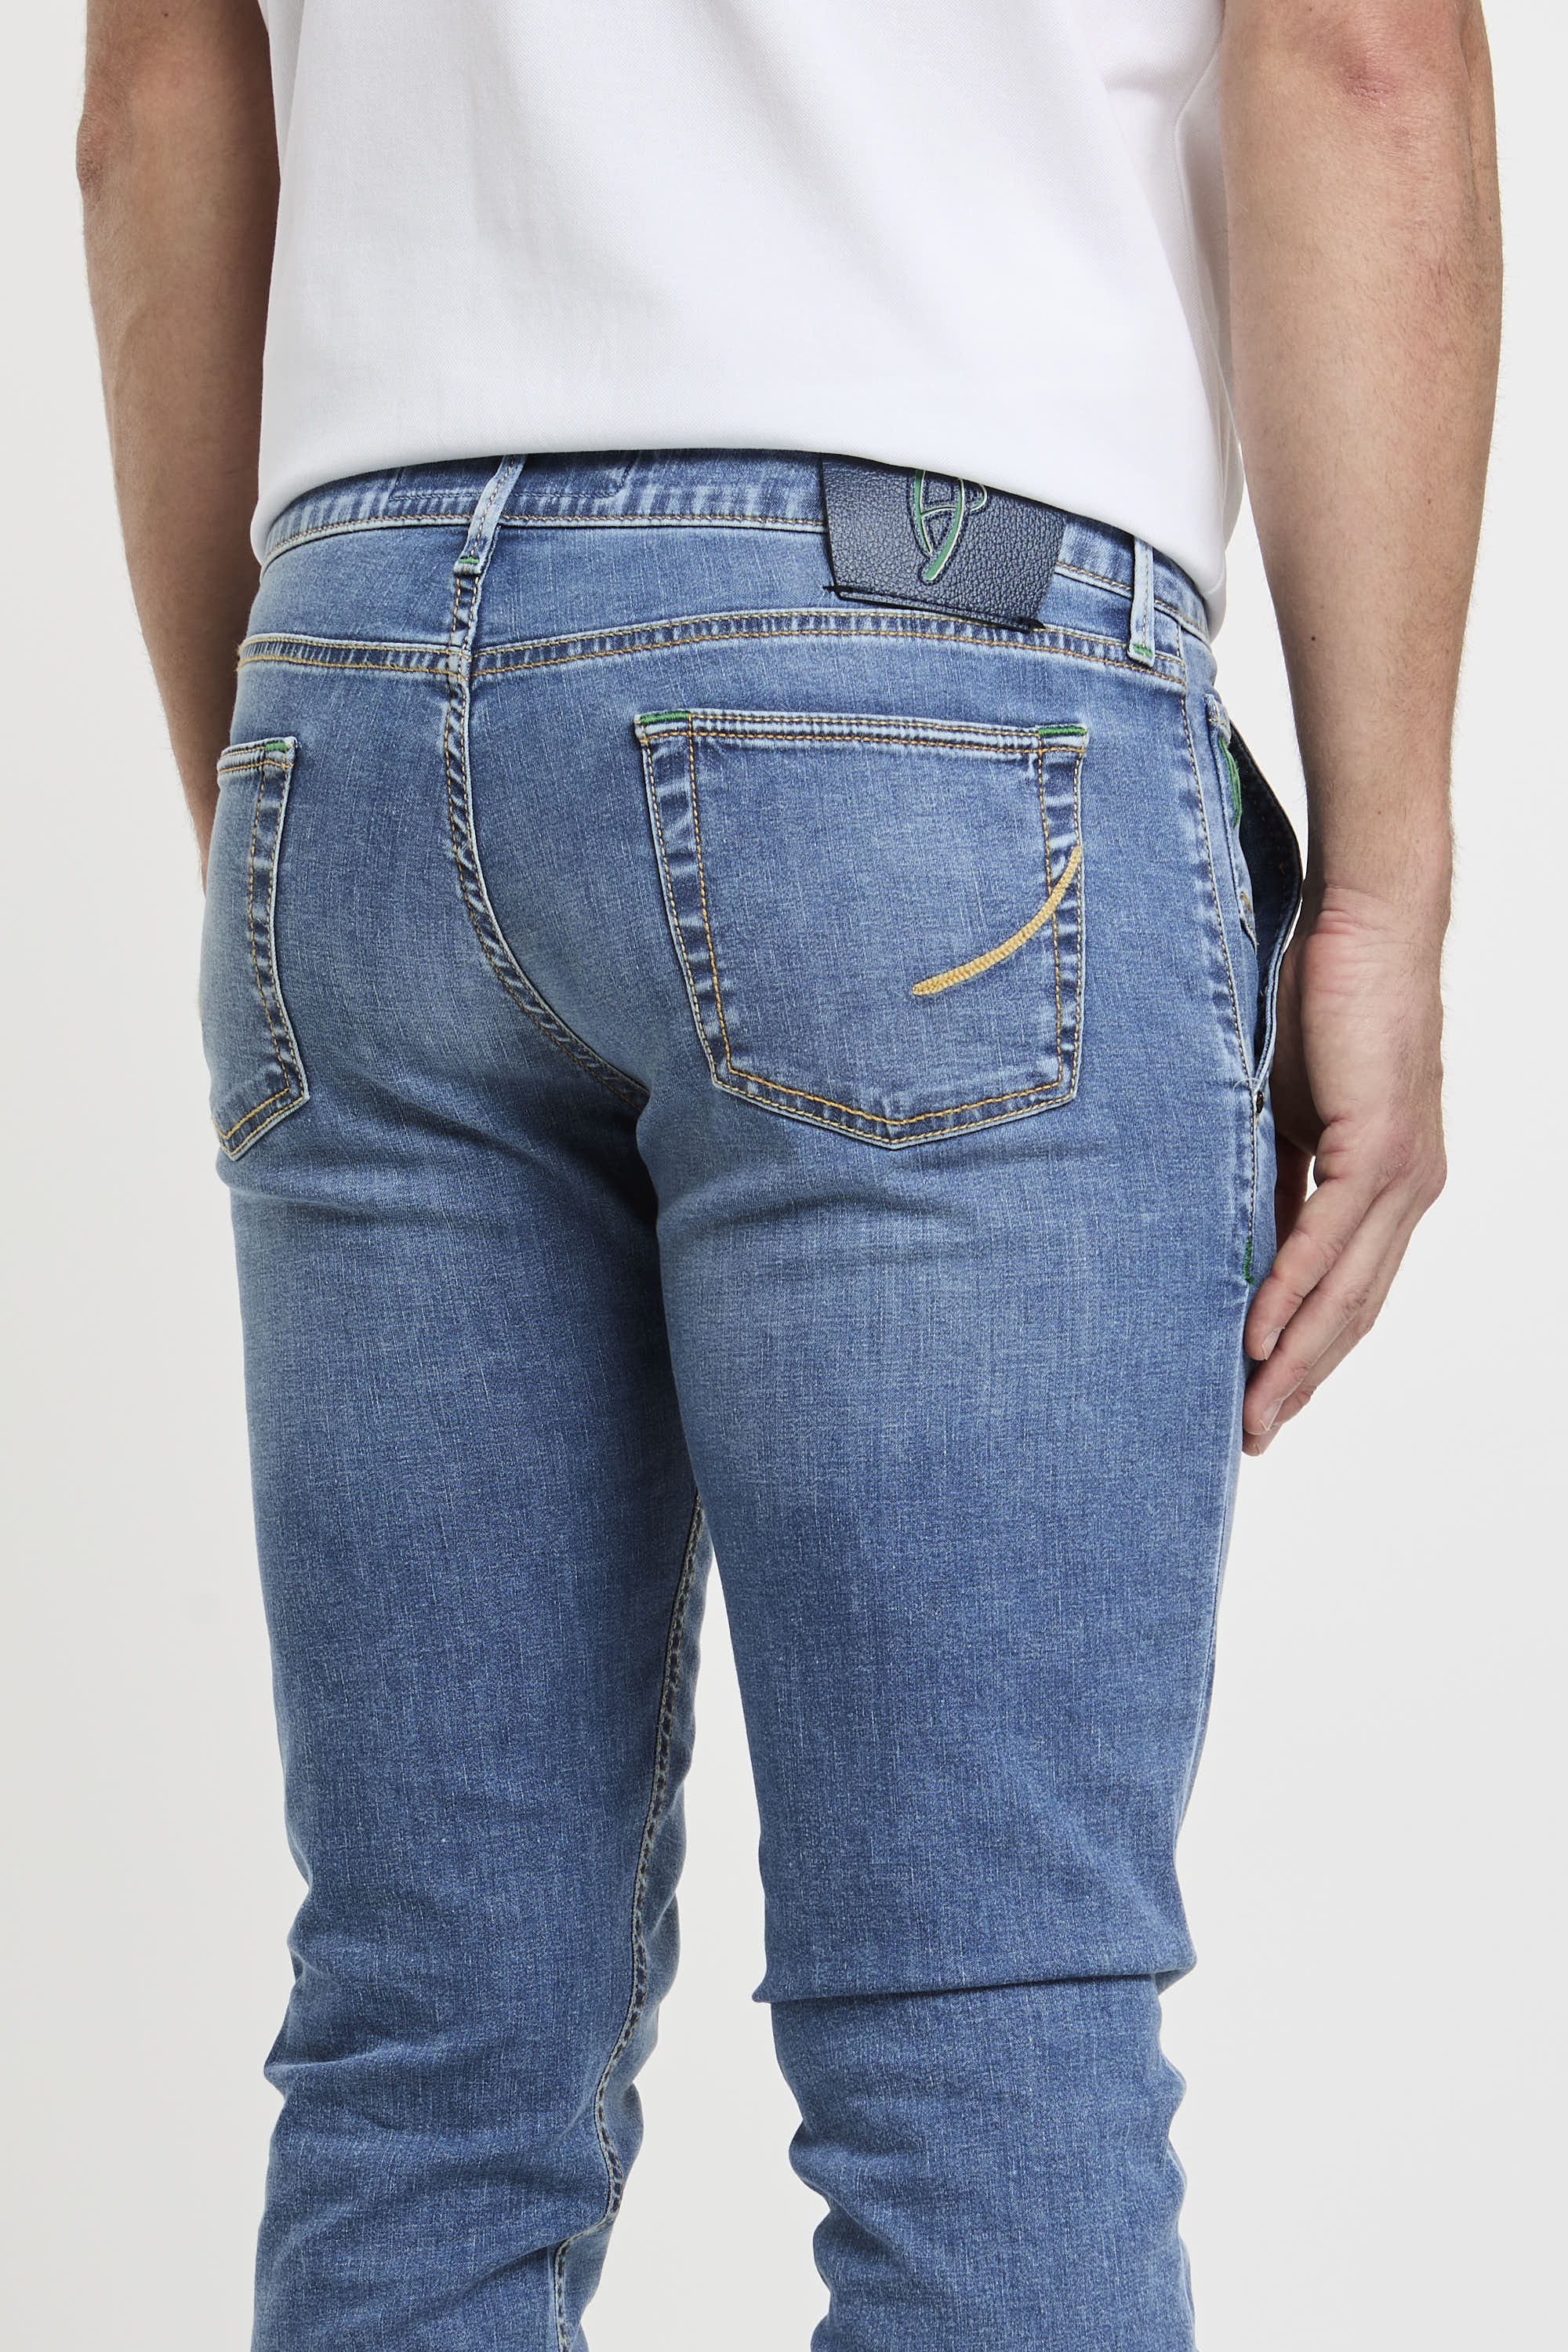 Handpicked Jeans Parma in Cotton Denim-6